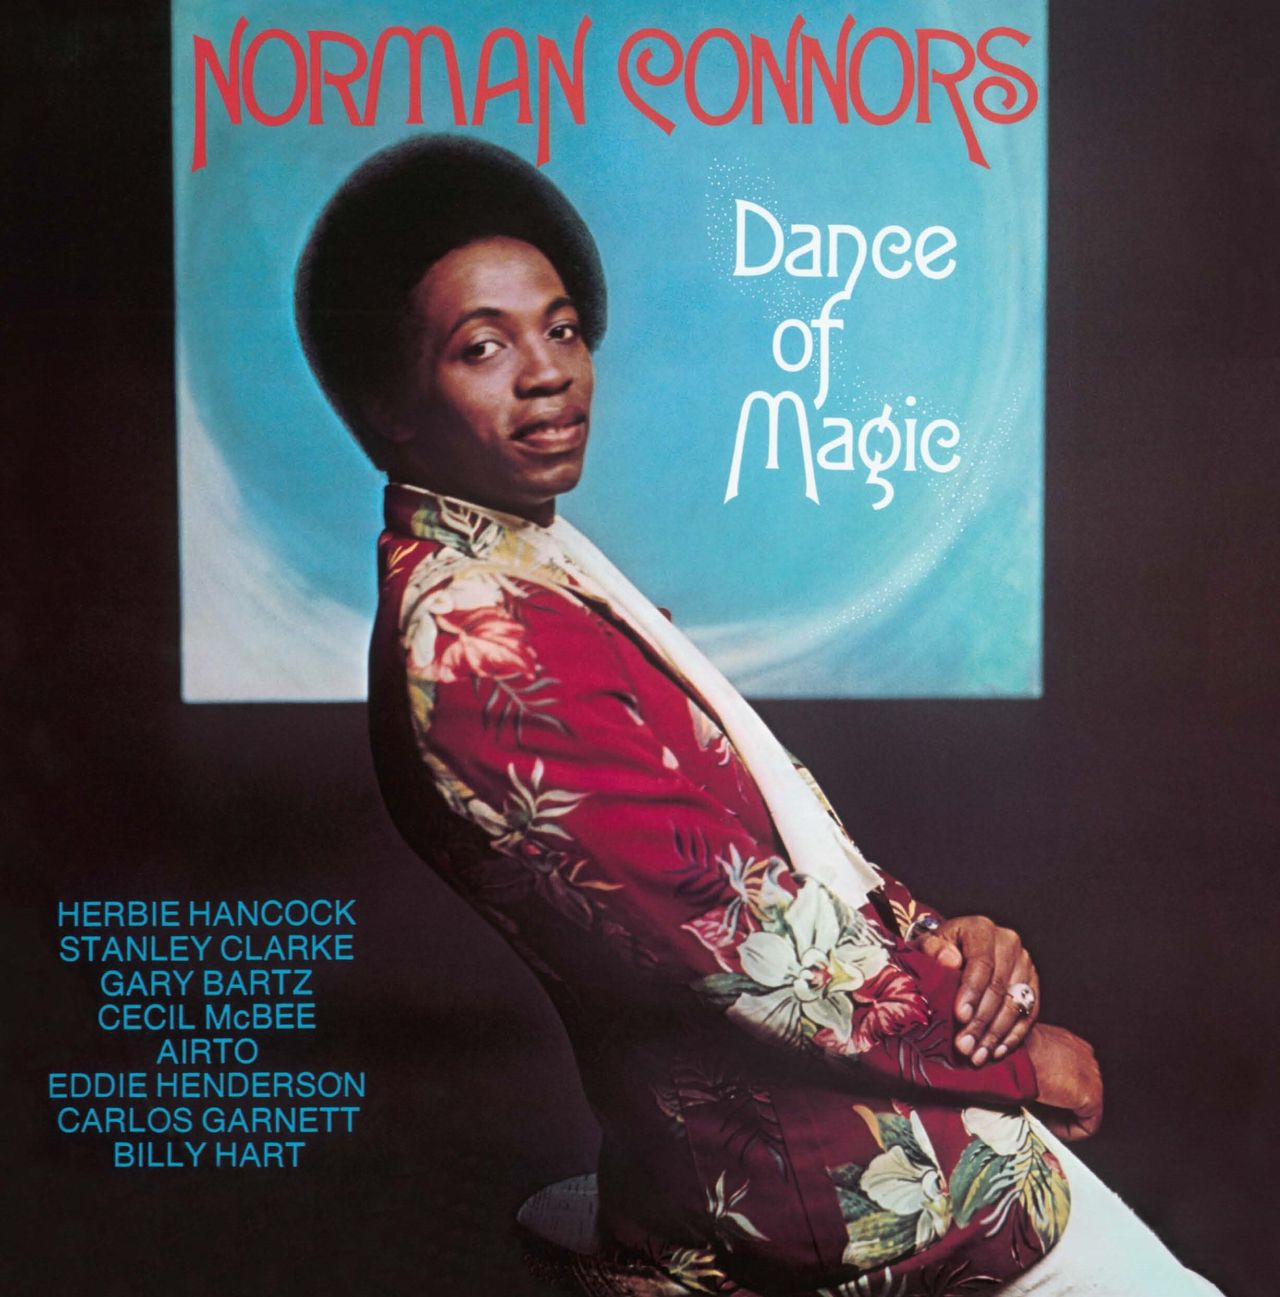 Norman Connors Dance Of Magic - Remastered 180 Gram - Sealed UK vinyl LP album (LP record) PPANBDS5674